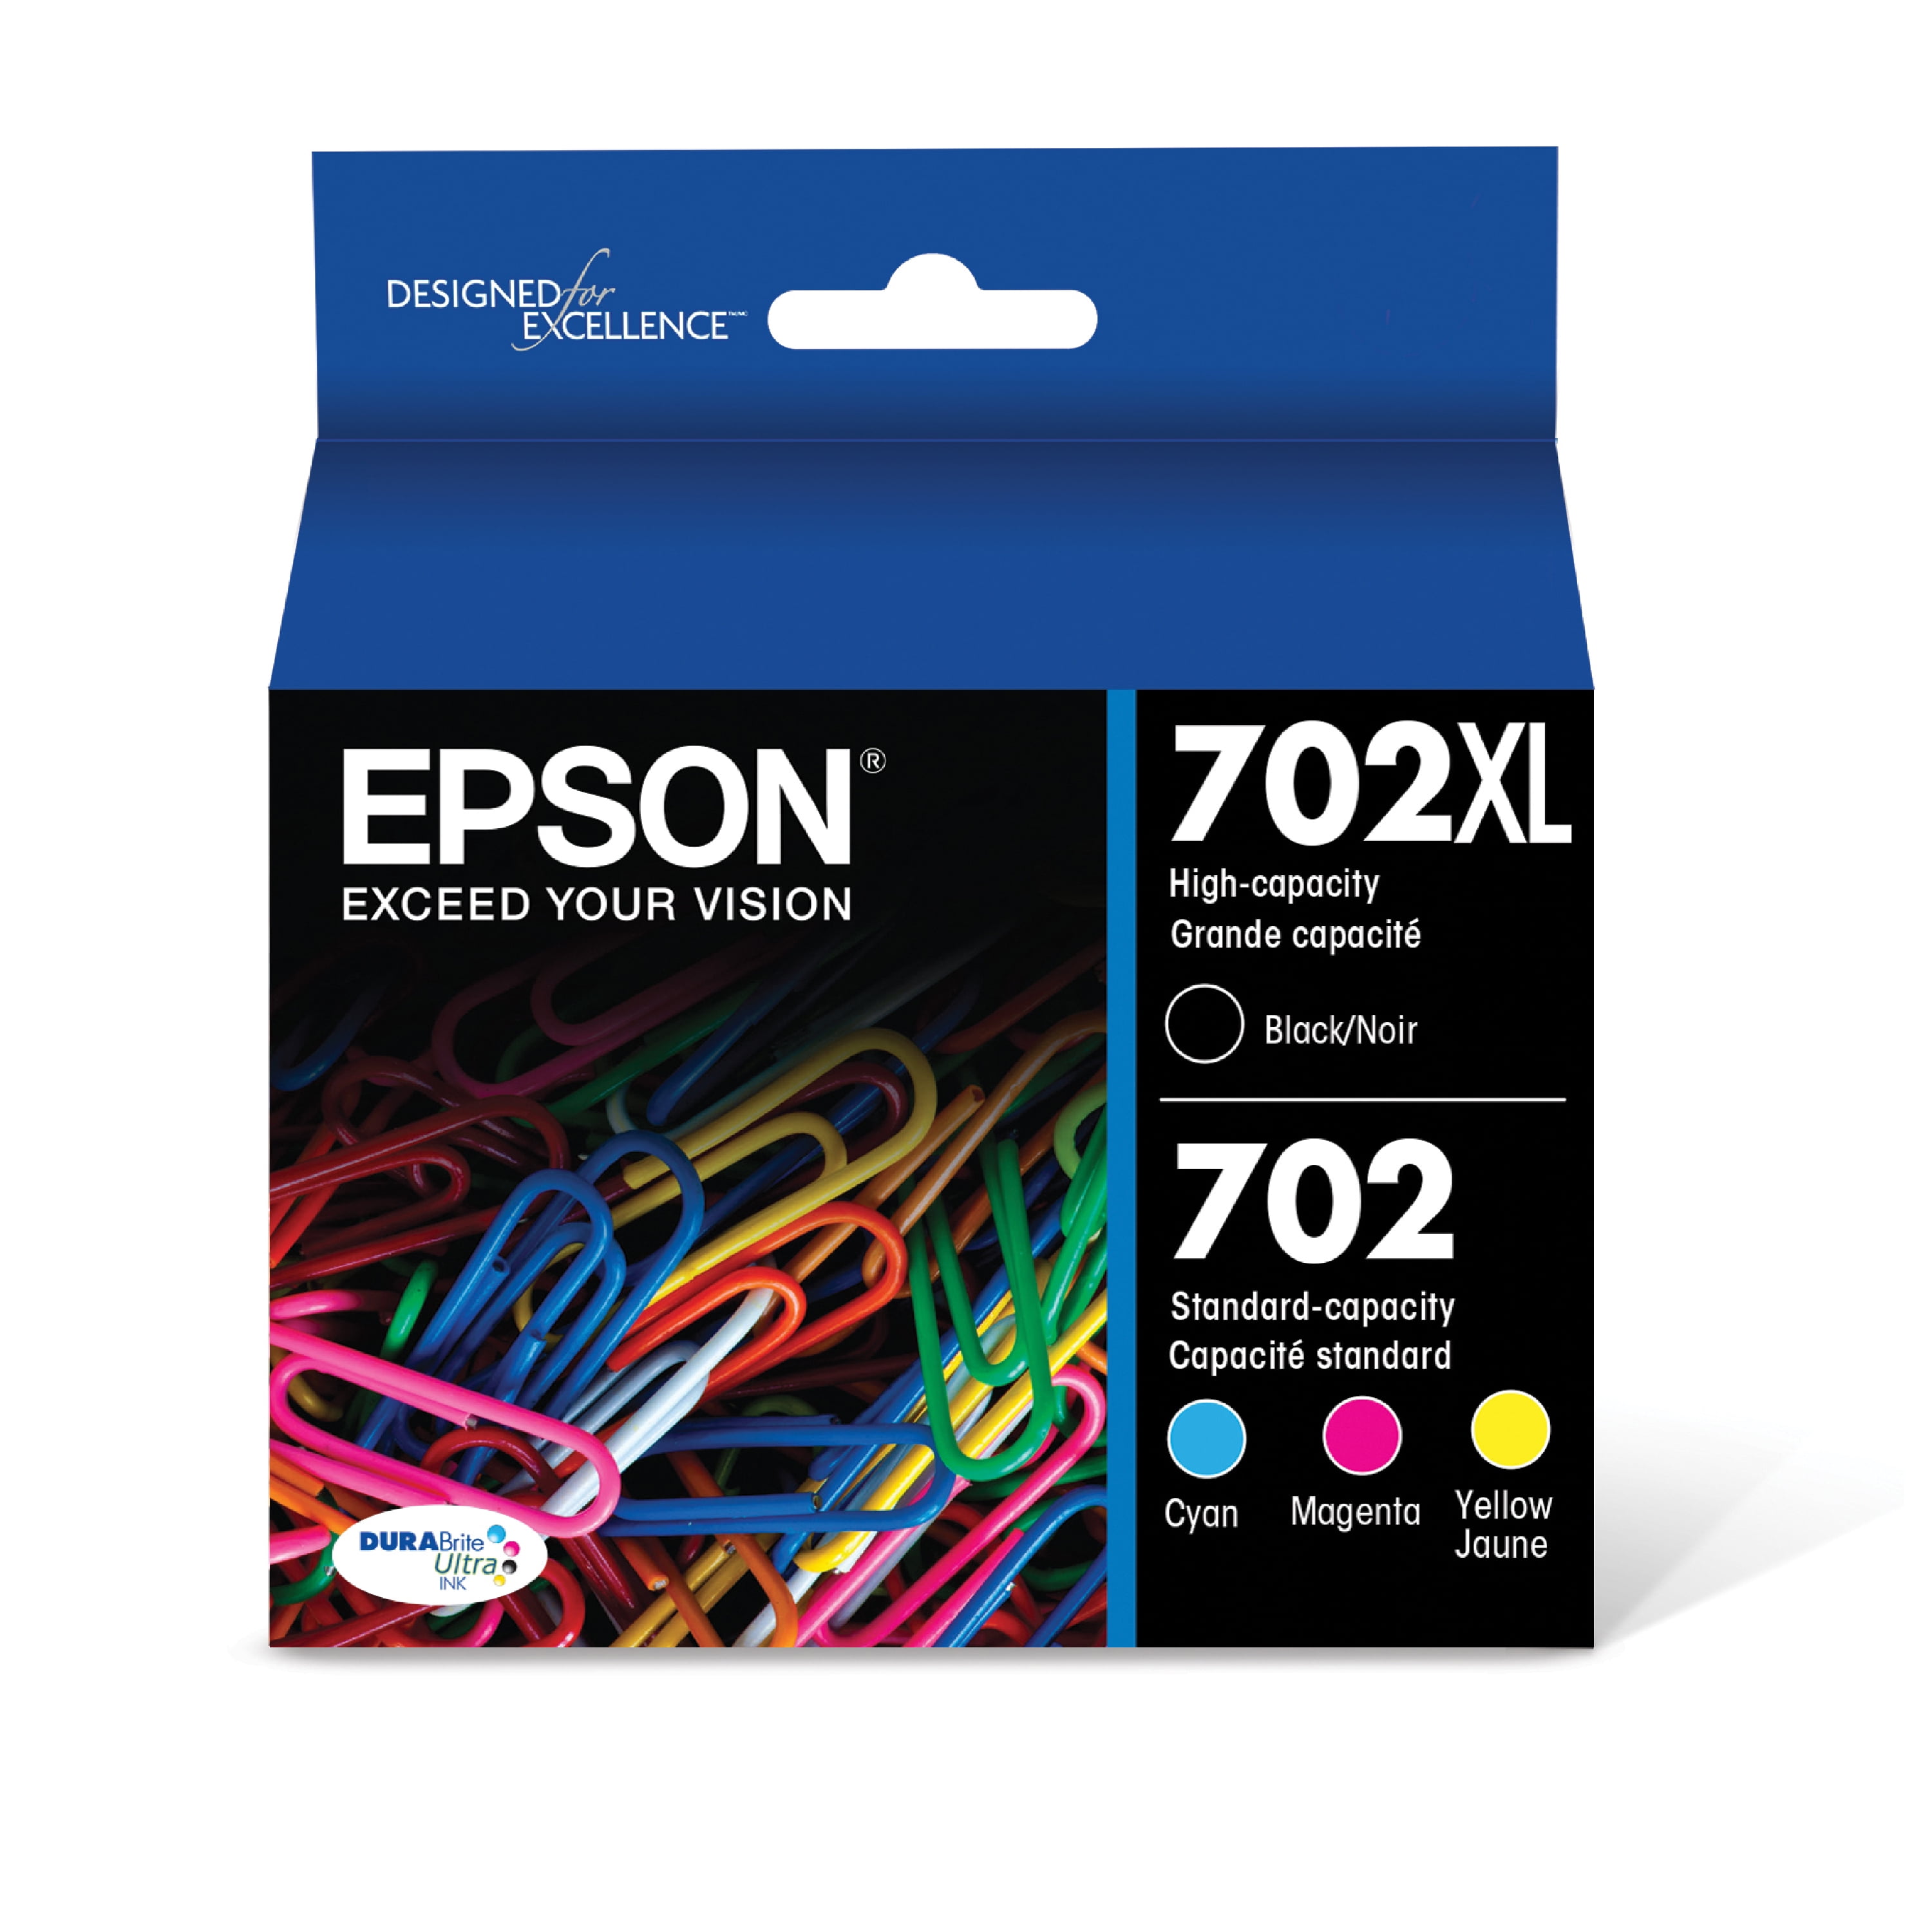 Aap ondersteboven gijzelaar EPSON T702 DURABrite Ultra Genuine Ink High Capacity Black & Standard Color  Cartridge Combo Pack - Walmart.com